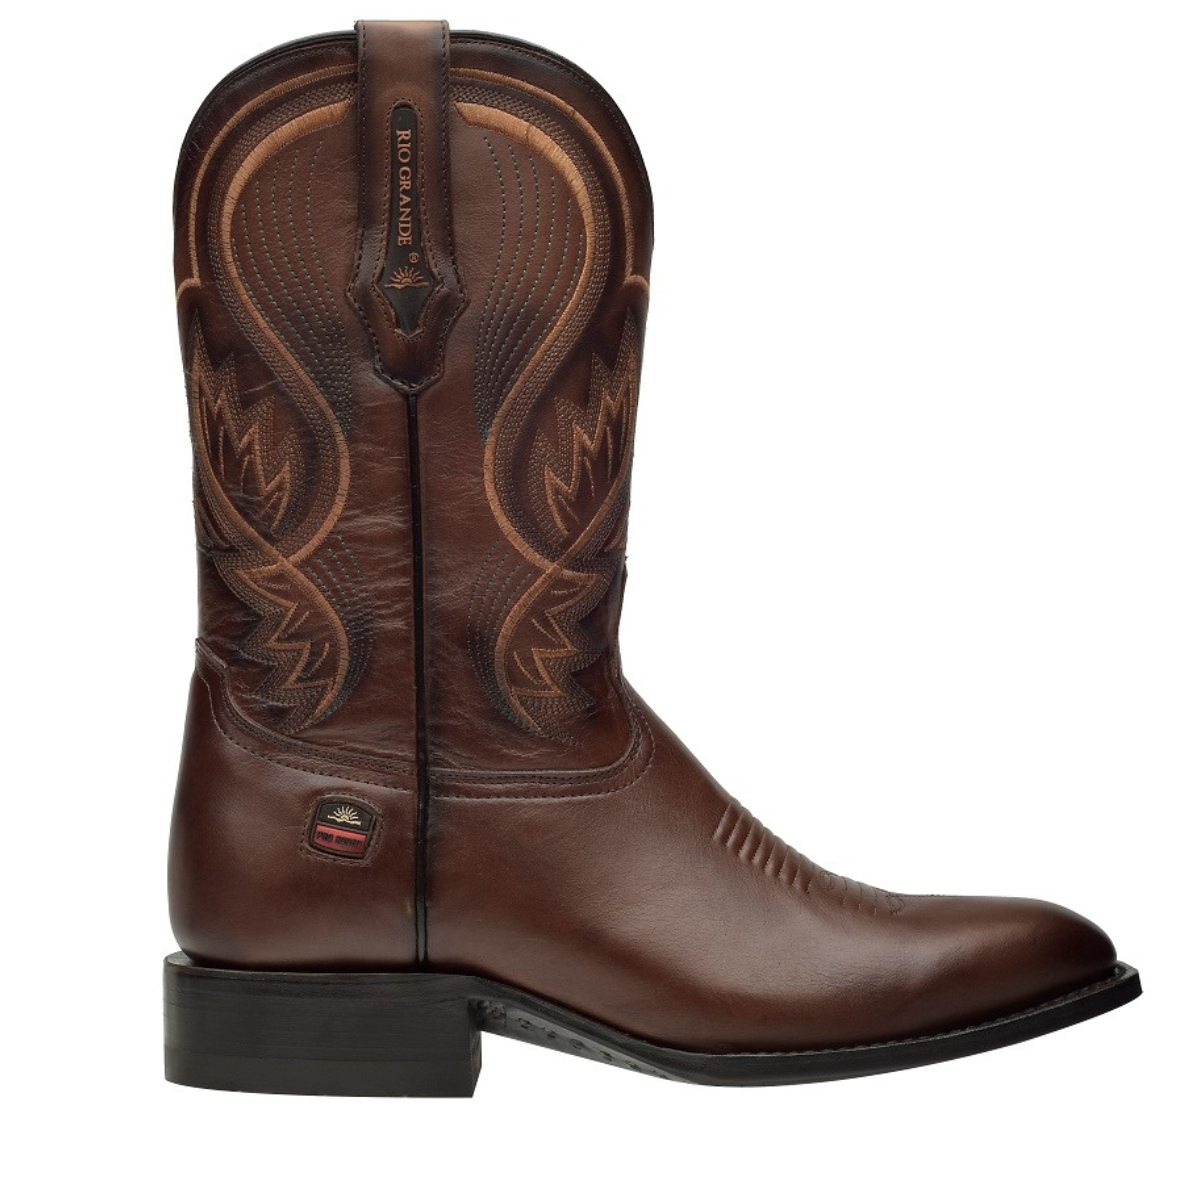 Rio Grande Men's Casual Oval Toe Cowboy Boots with Zipper